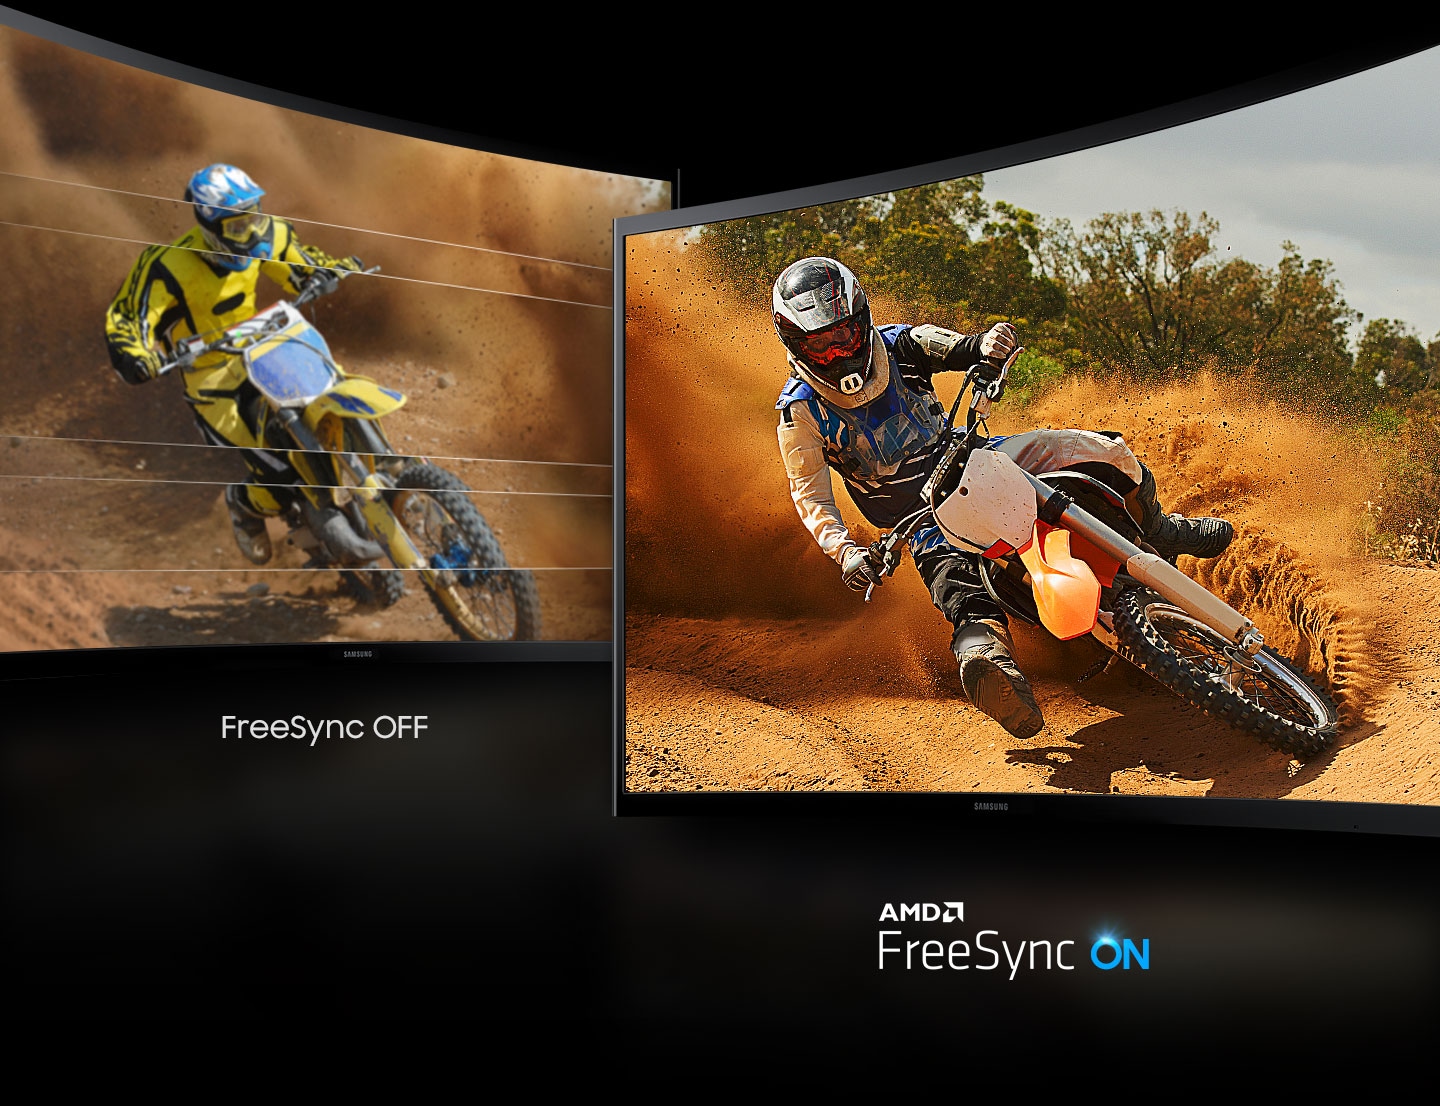 Сравнение между FreeSync OFF и AMD FreeSync On. FreeSync OFF вызывает разрывы изображения всадника на мониторе, но изображение всадника на мониторе AMD FreeSync видно четко и без помех.